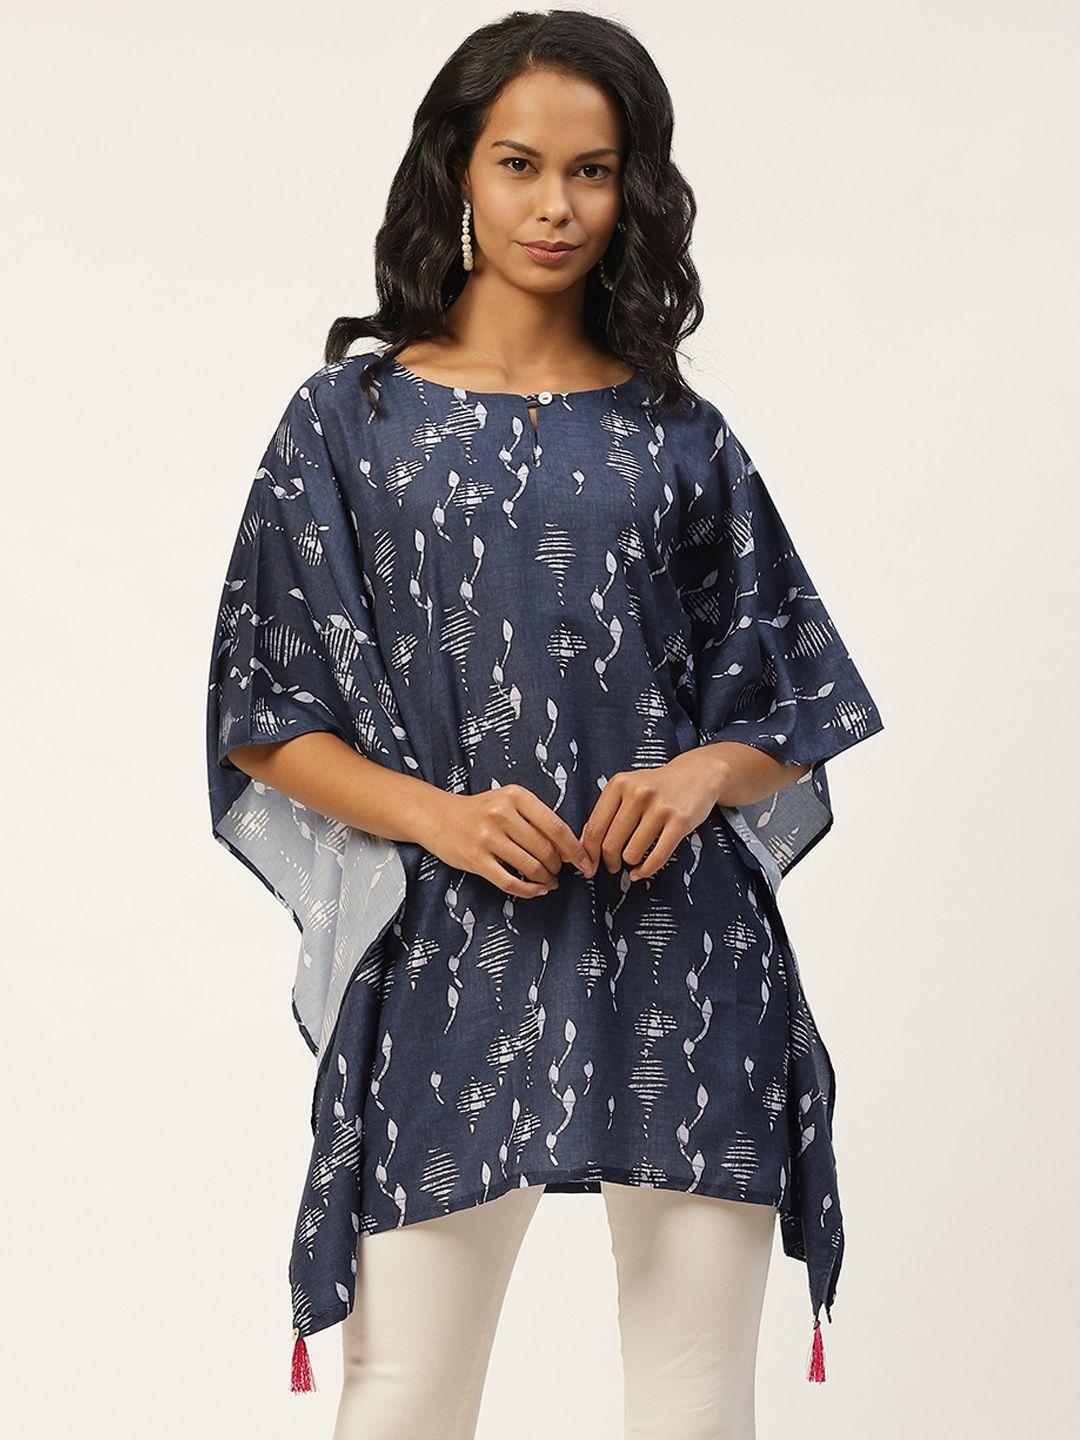 shiloh-women's-navy-blue-&-off-white-printed-kaftan-style-tunic